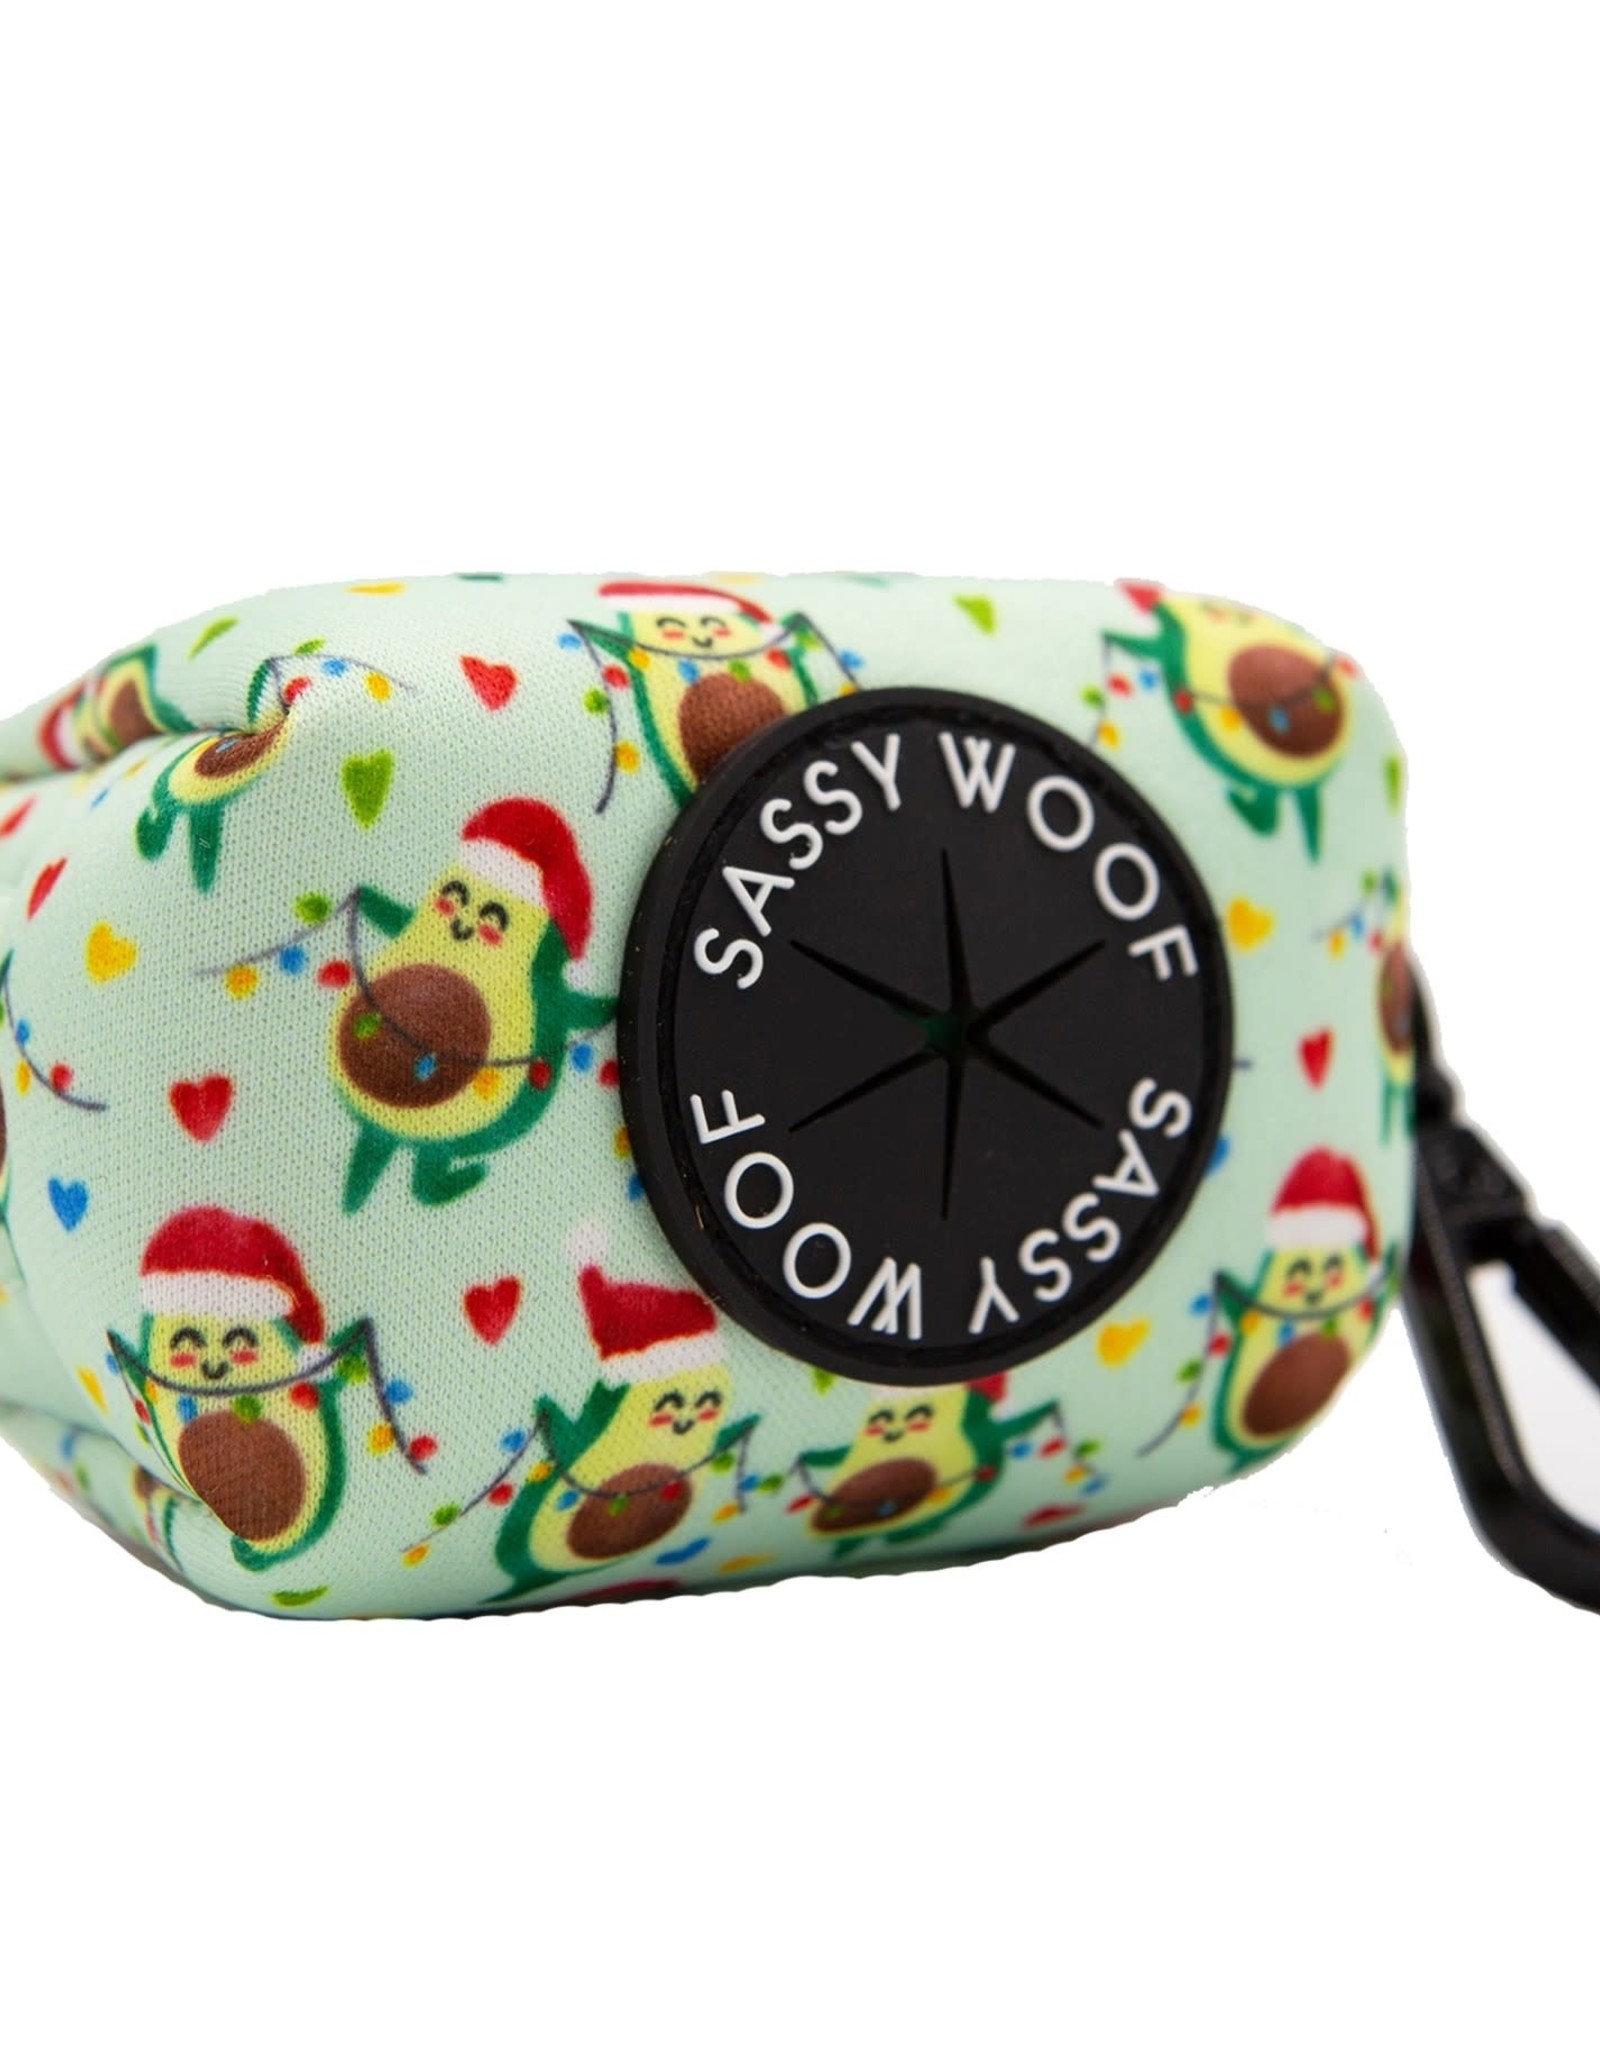 Sassy Woof Holiday Jingle Bell Guac Waste Bag Holder